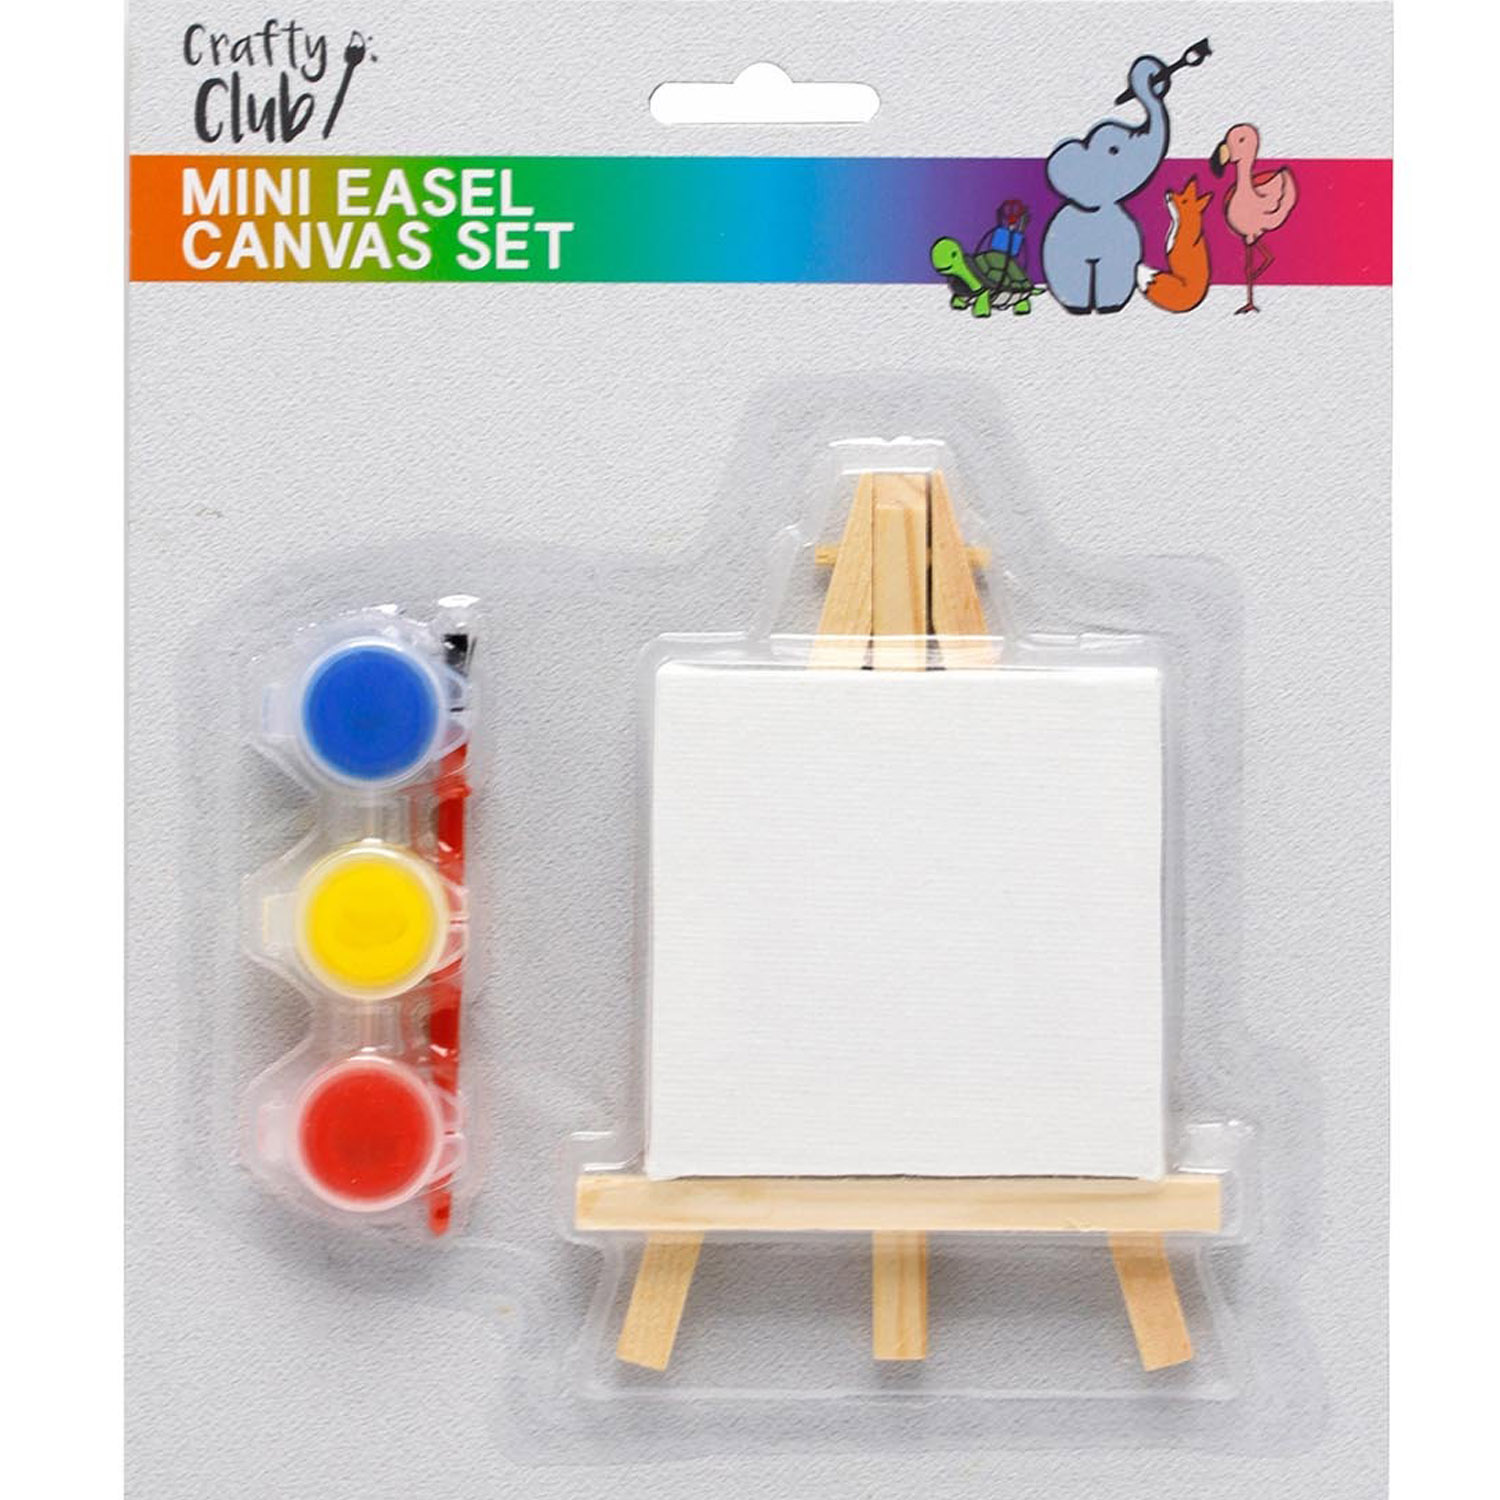 Crafty Club Mini Easel Canvas Set Image